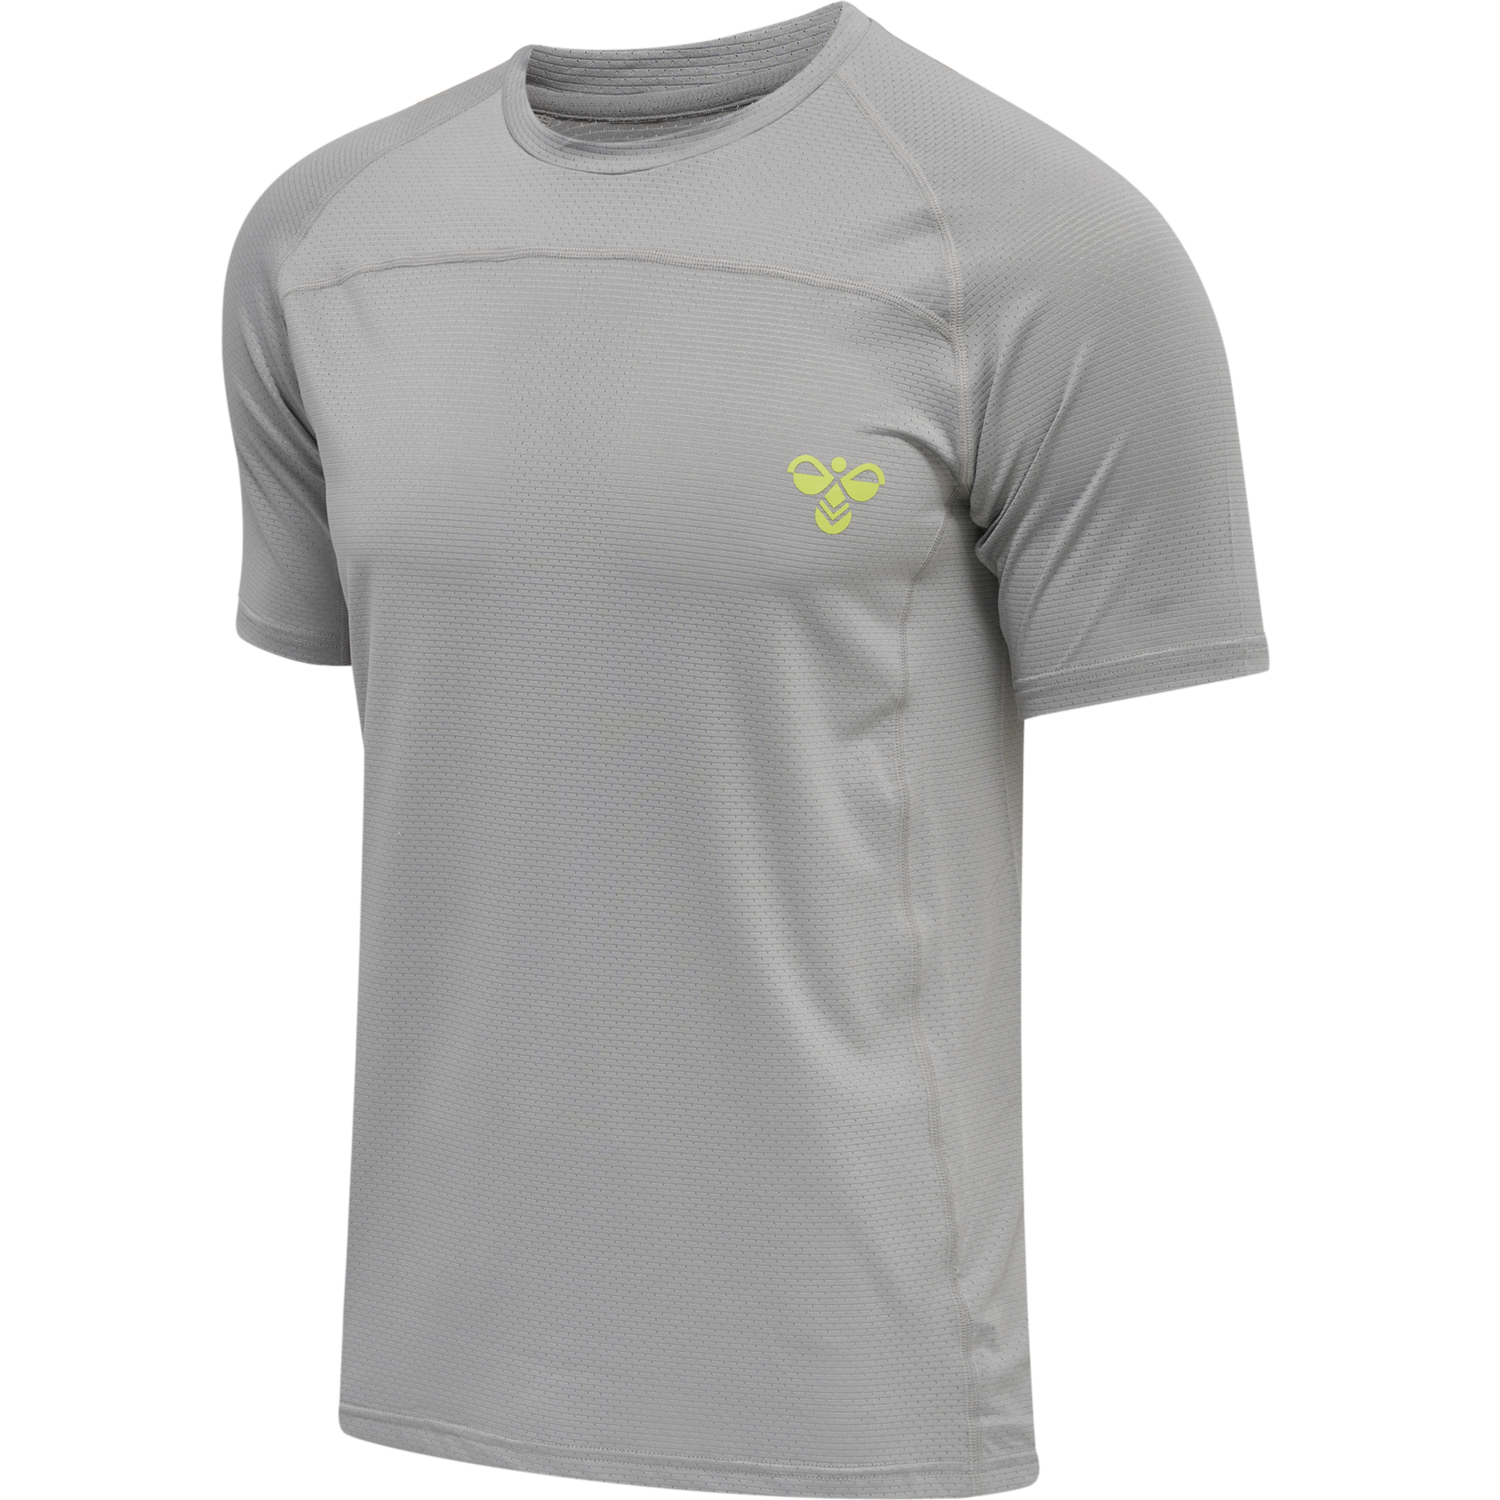 Ronhill Stride Graphic Mens Running Top Grey Lightweight Short Sleeve T-Shirt 